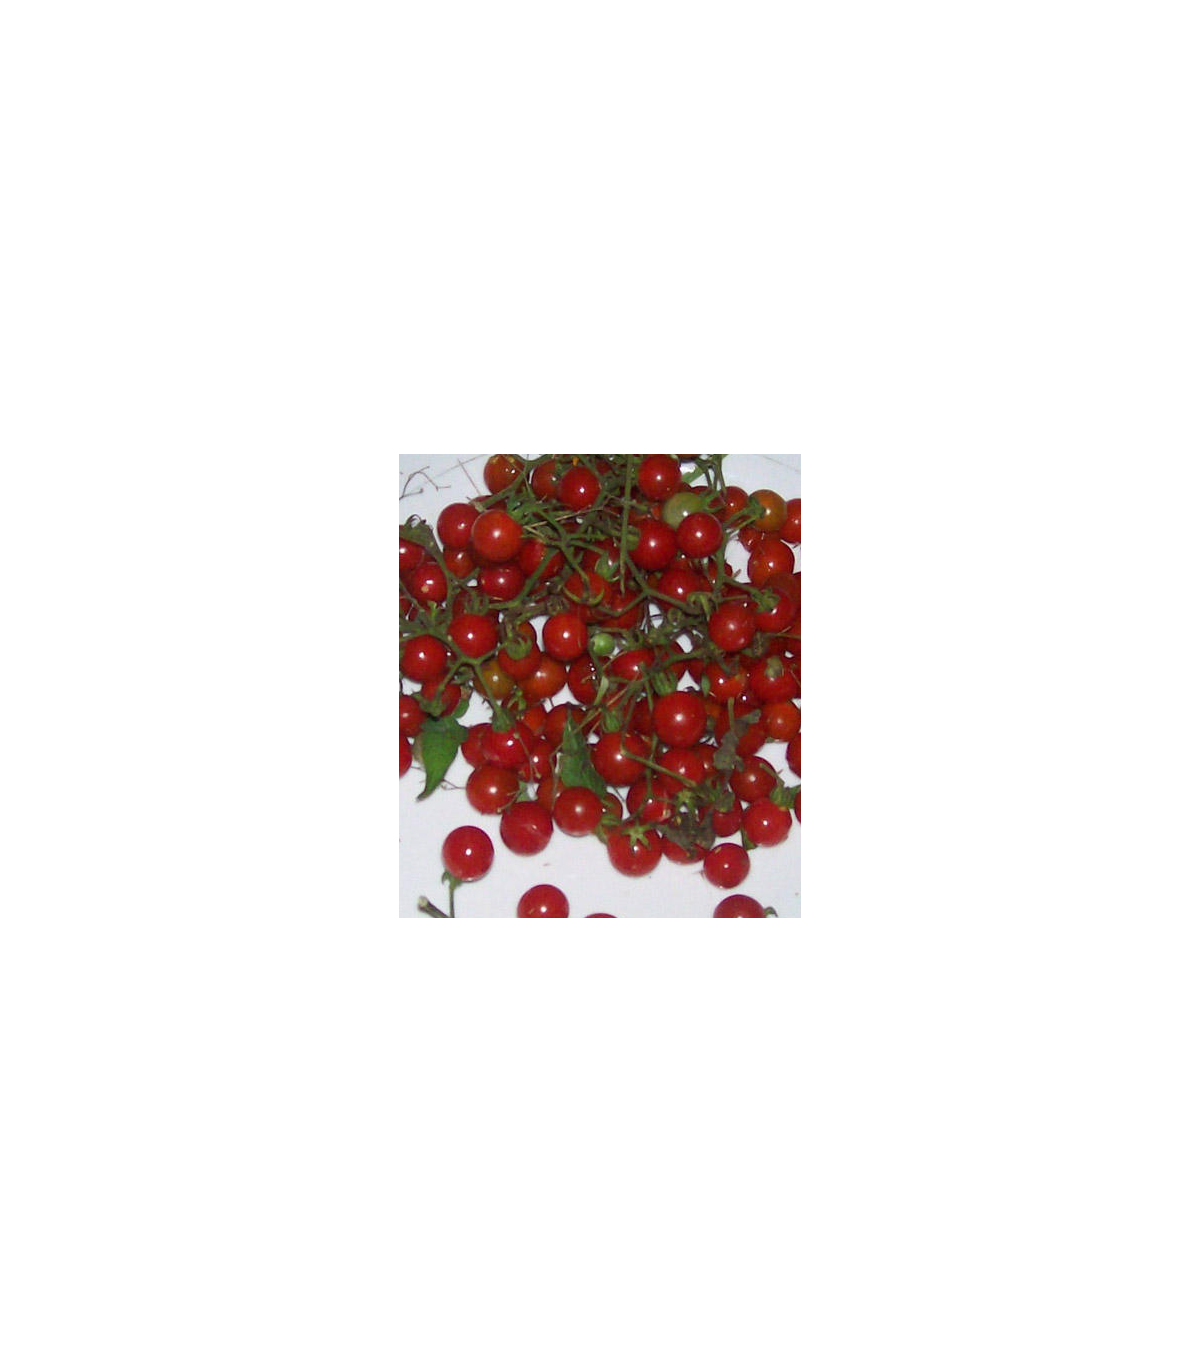 Divá paradajka červená - Lycopersicon pimpinellifolium - semiačka - 6 ks